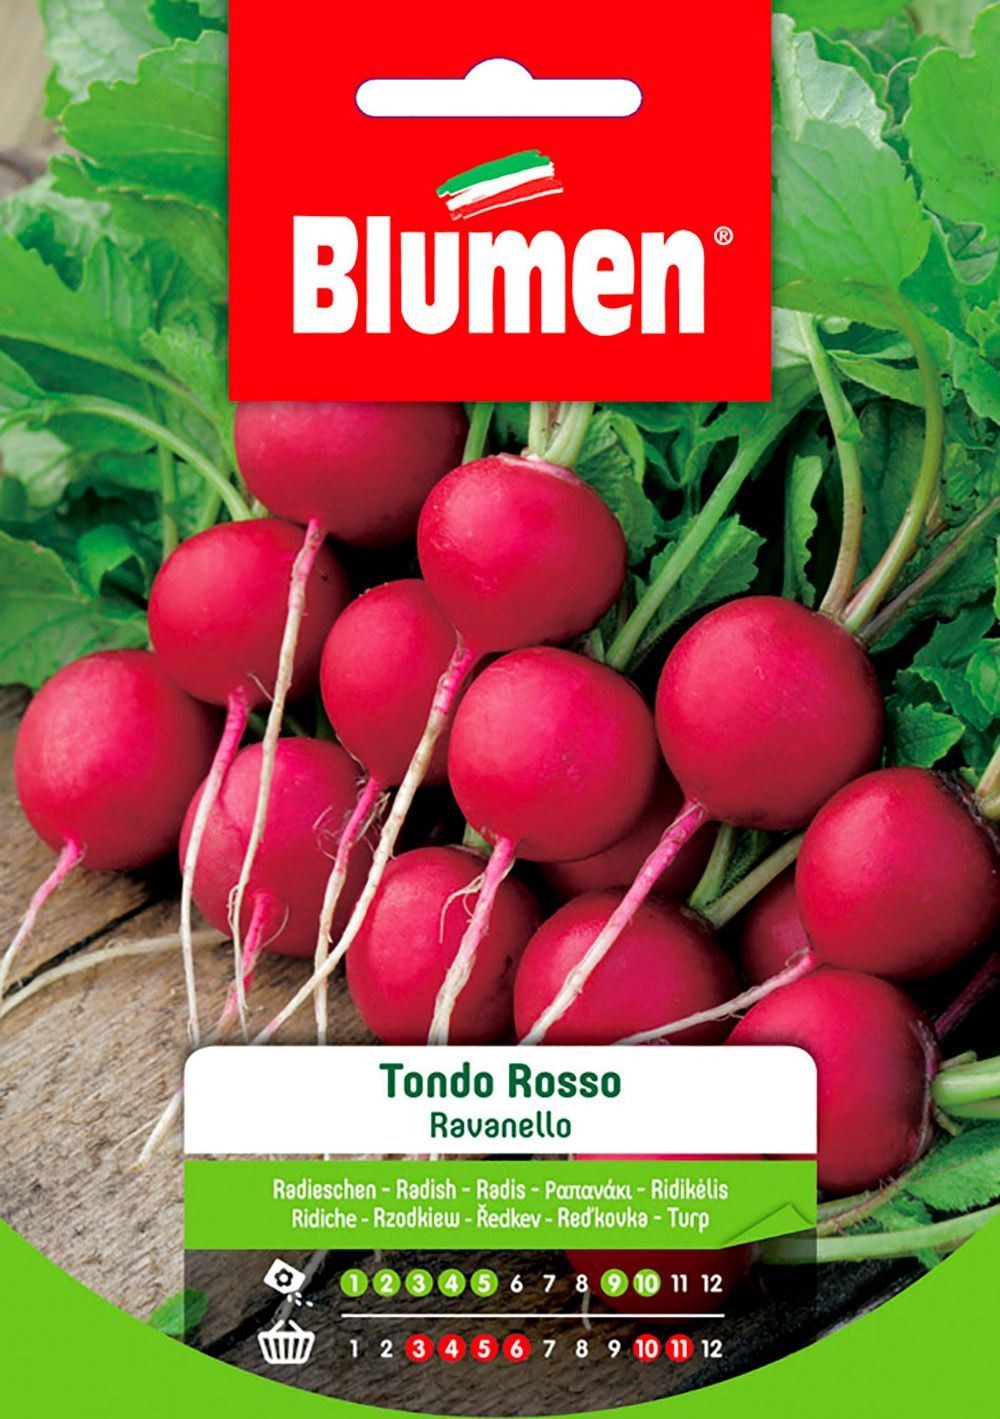 Blumen - Semi - Ravanello - Tondo - Rosso - Busta